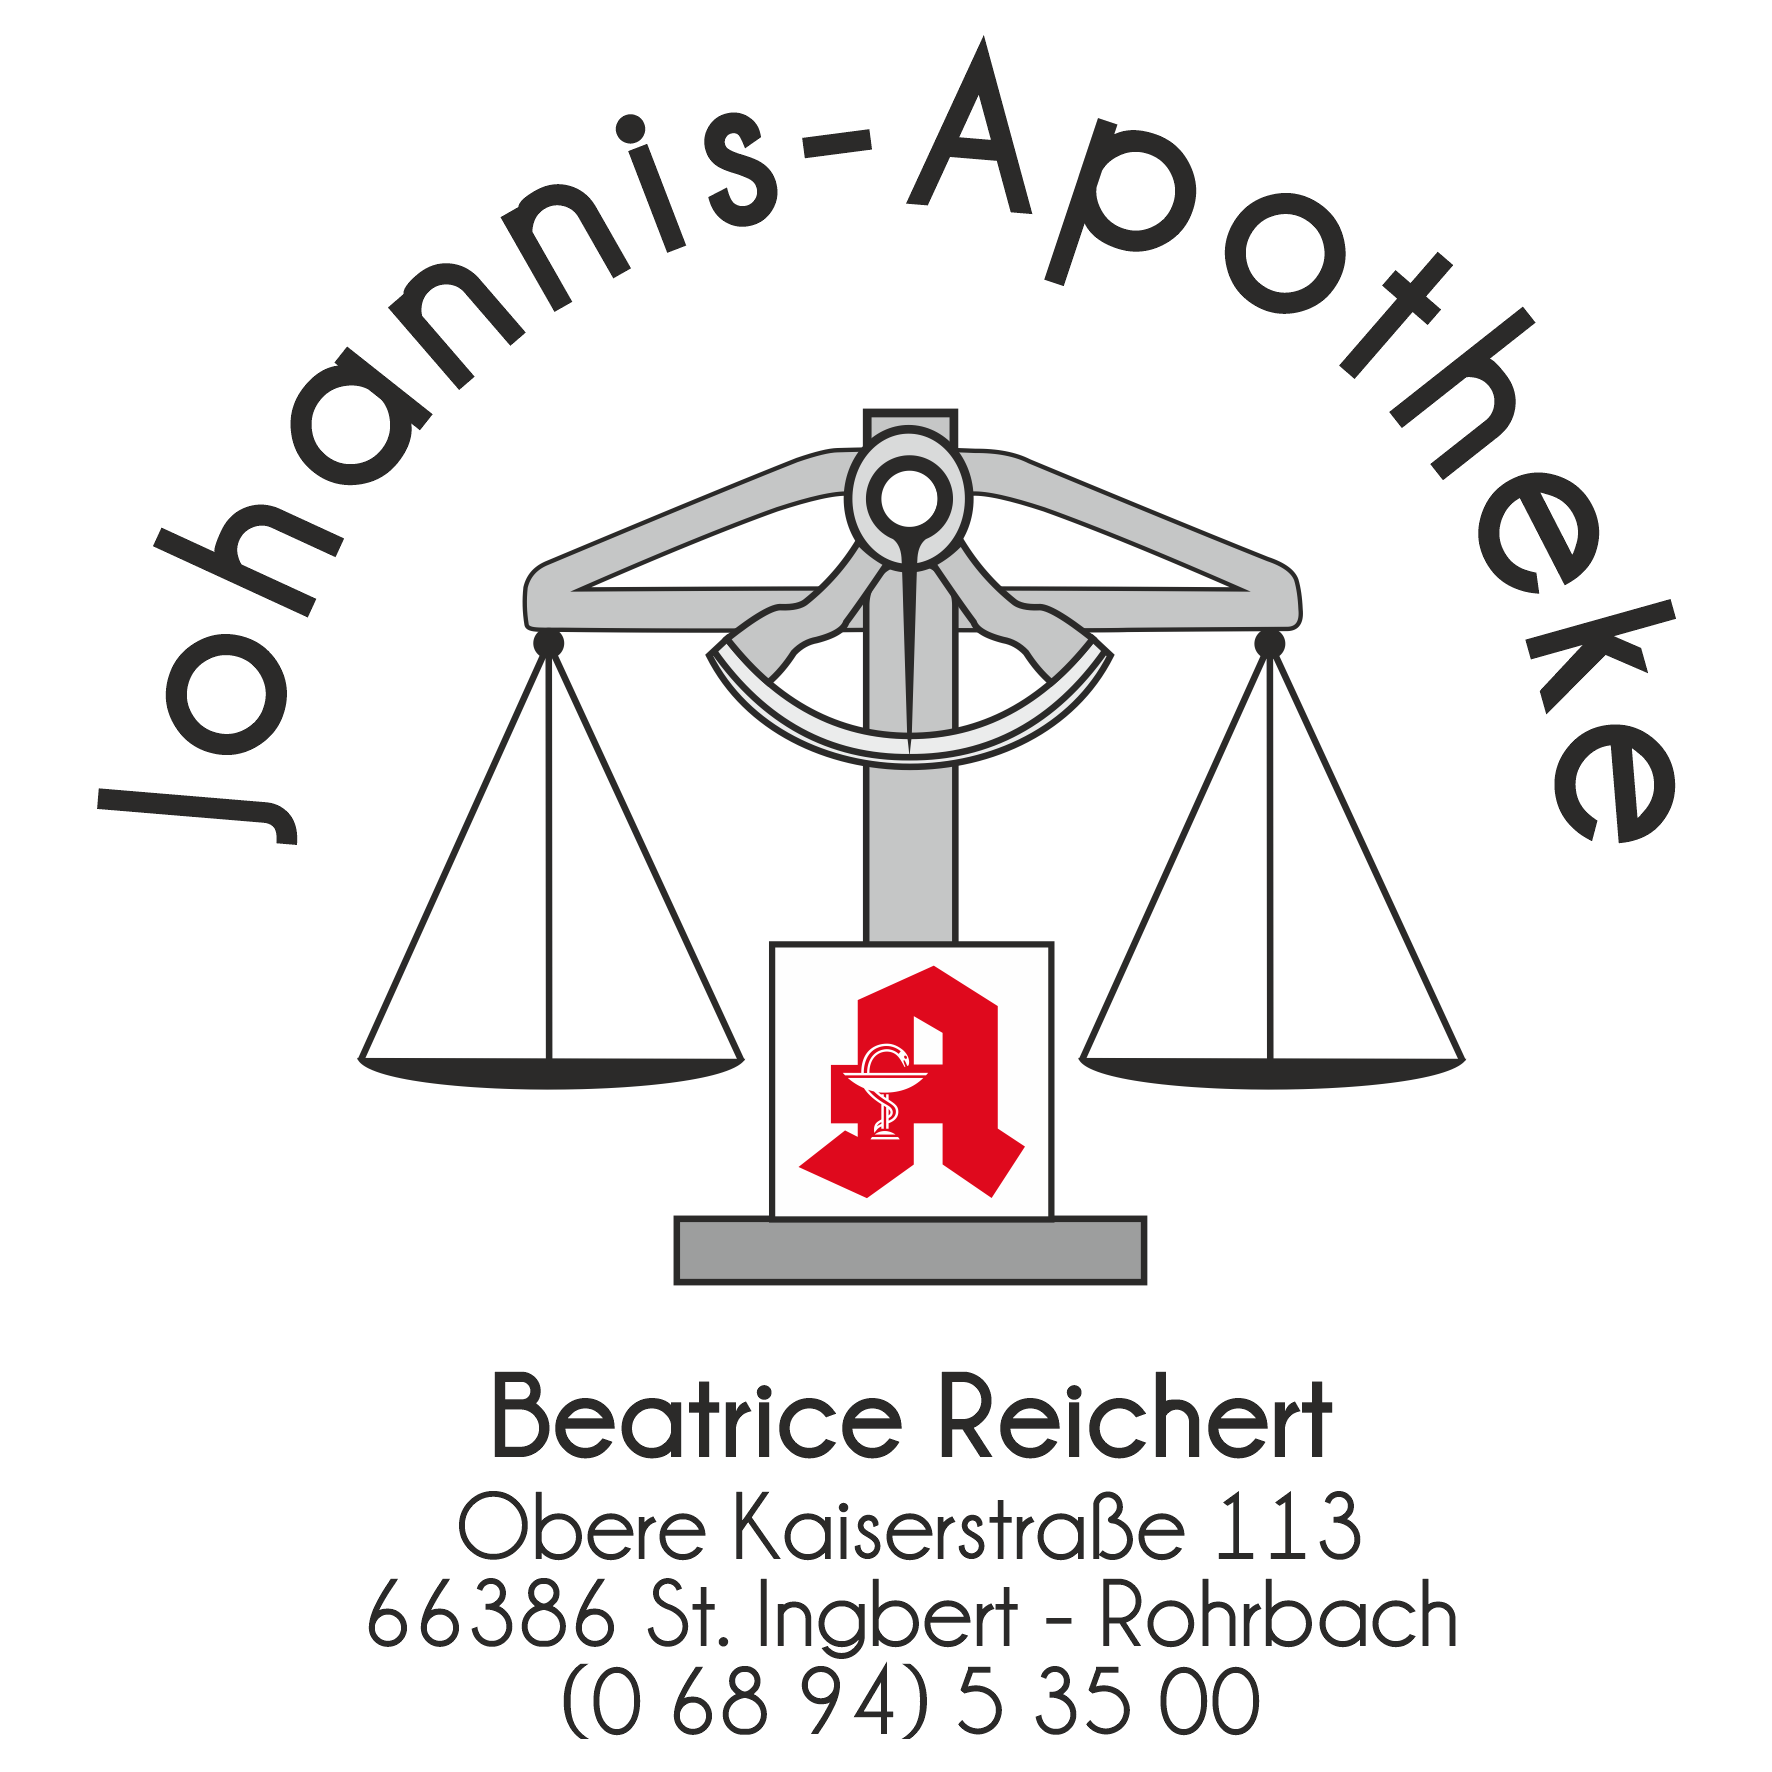 Logo Logo der Johannis-Apotheke